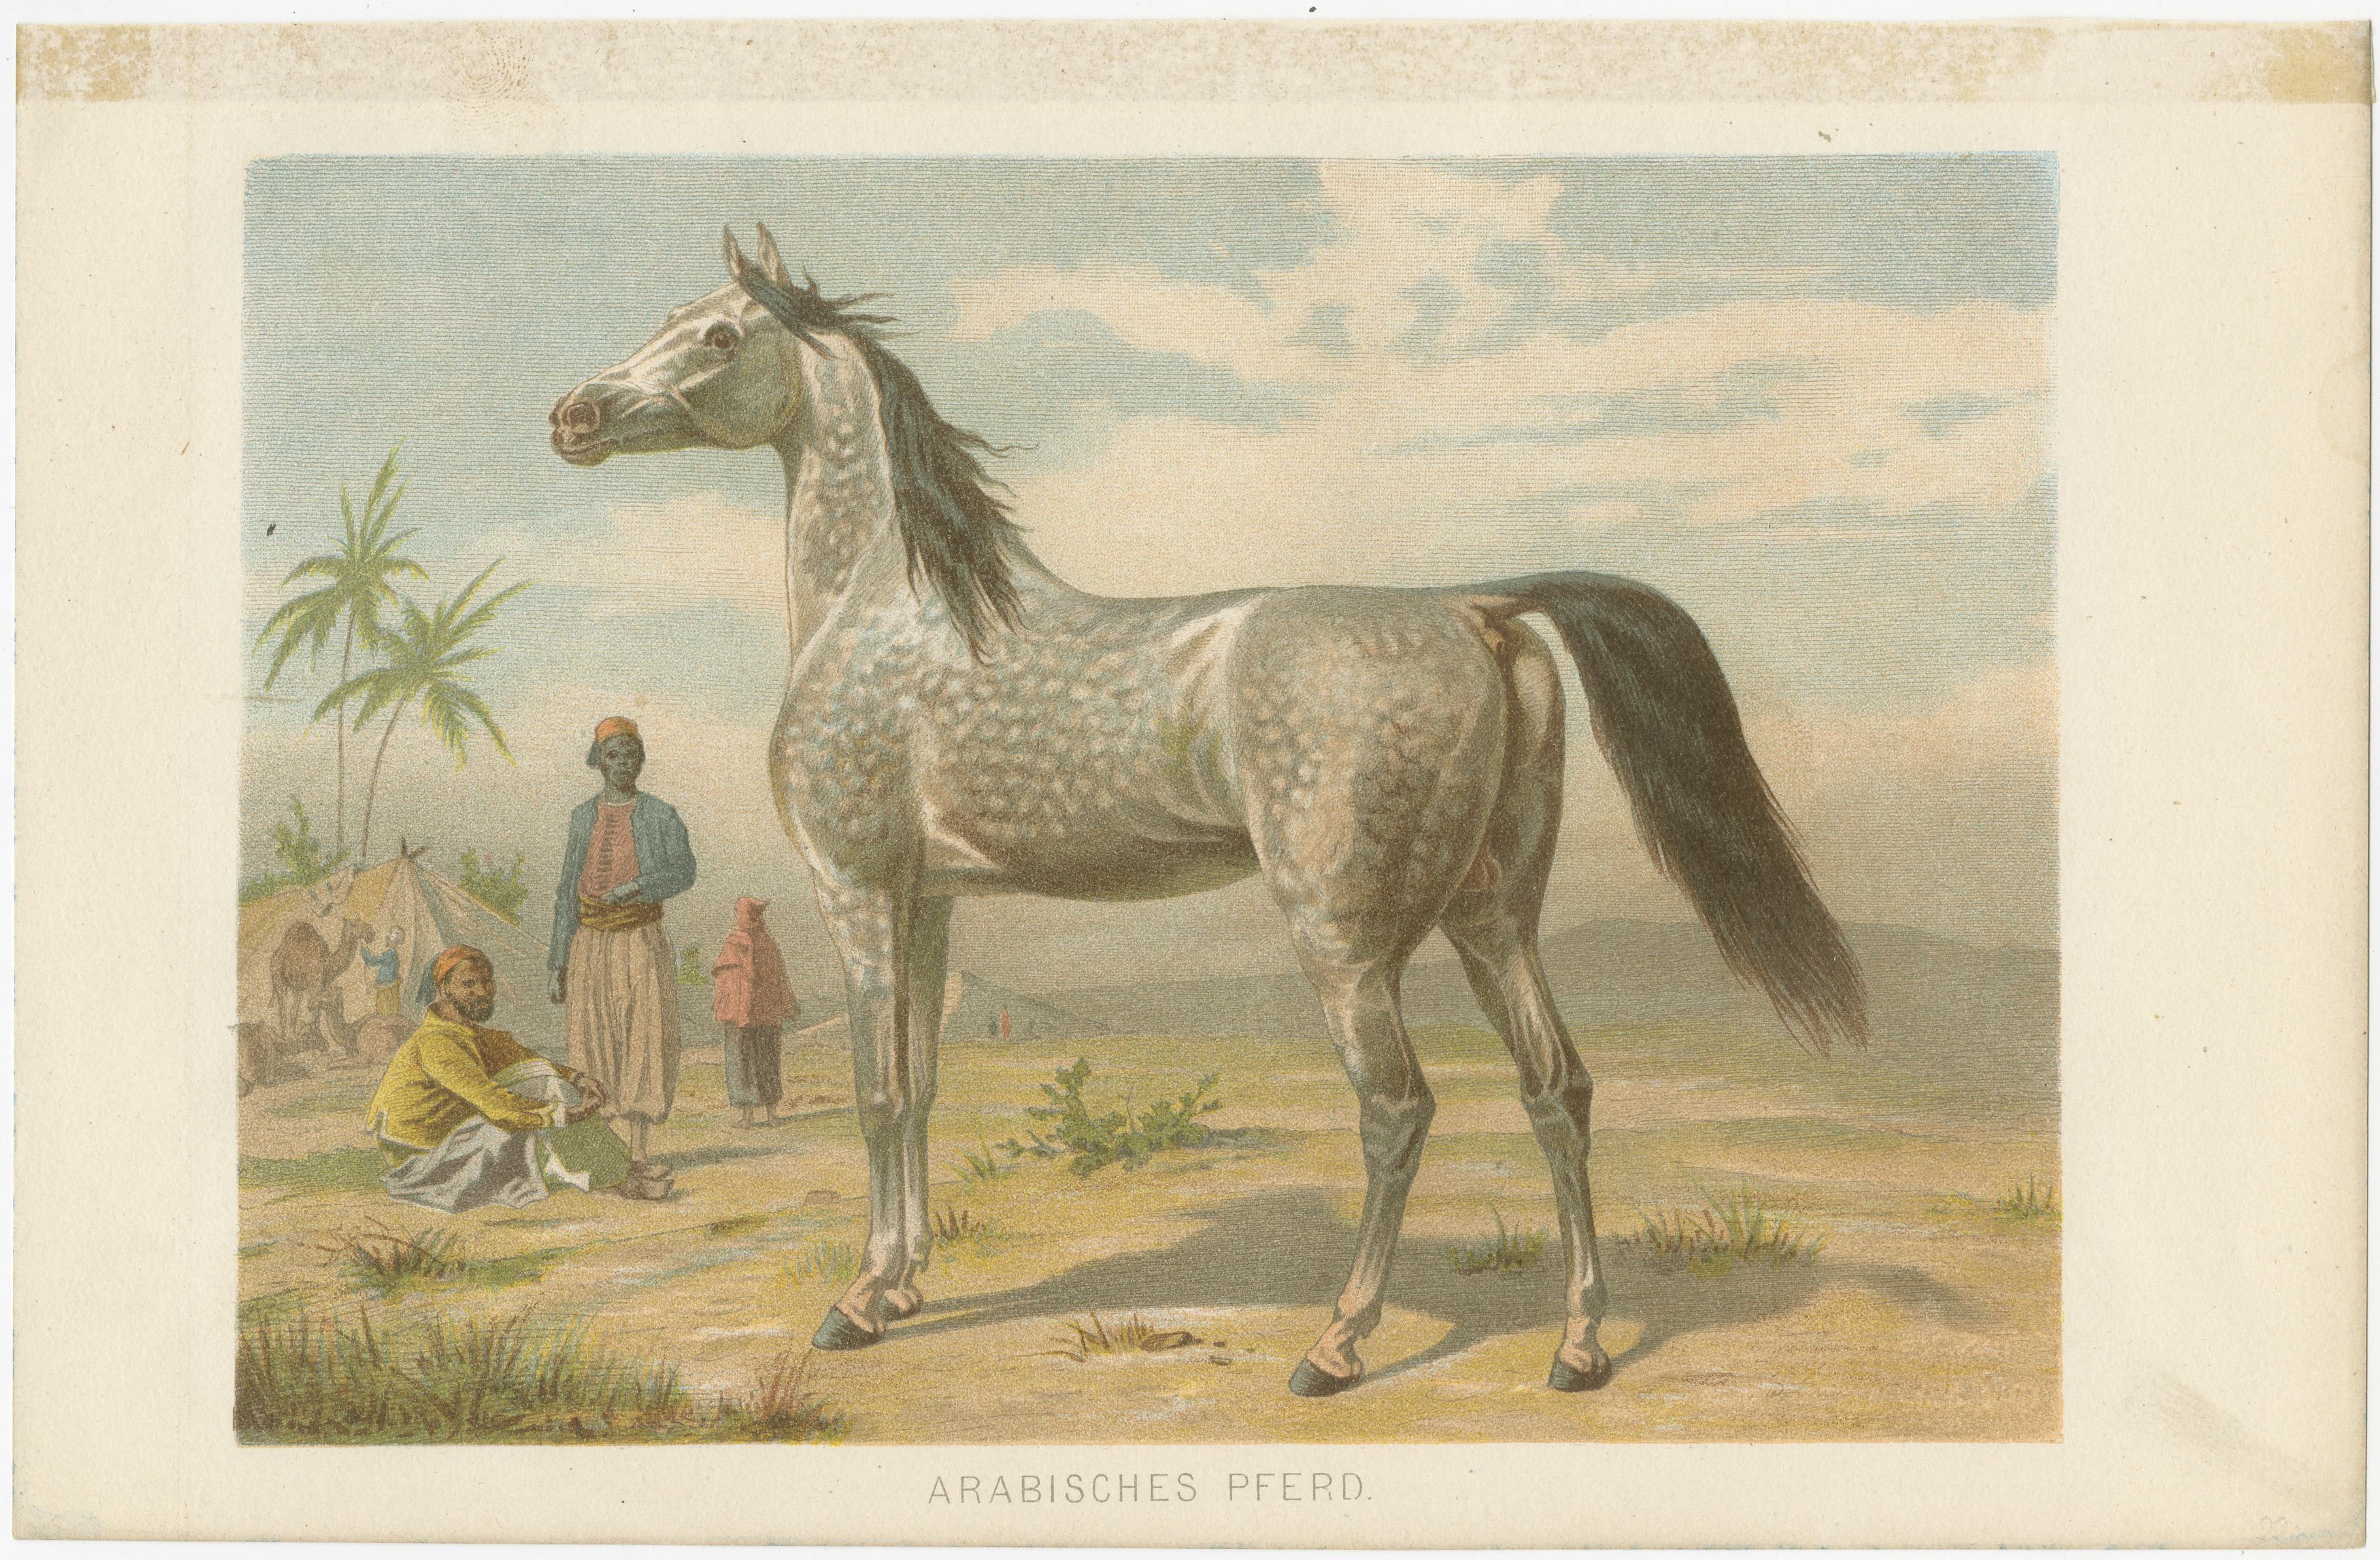 Antique print titled 'Arabisches Pferd'. Original chromolithograph of an Arabian horse. Published circa 1890.